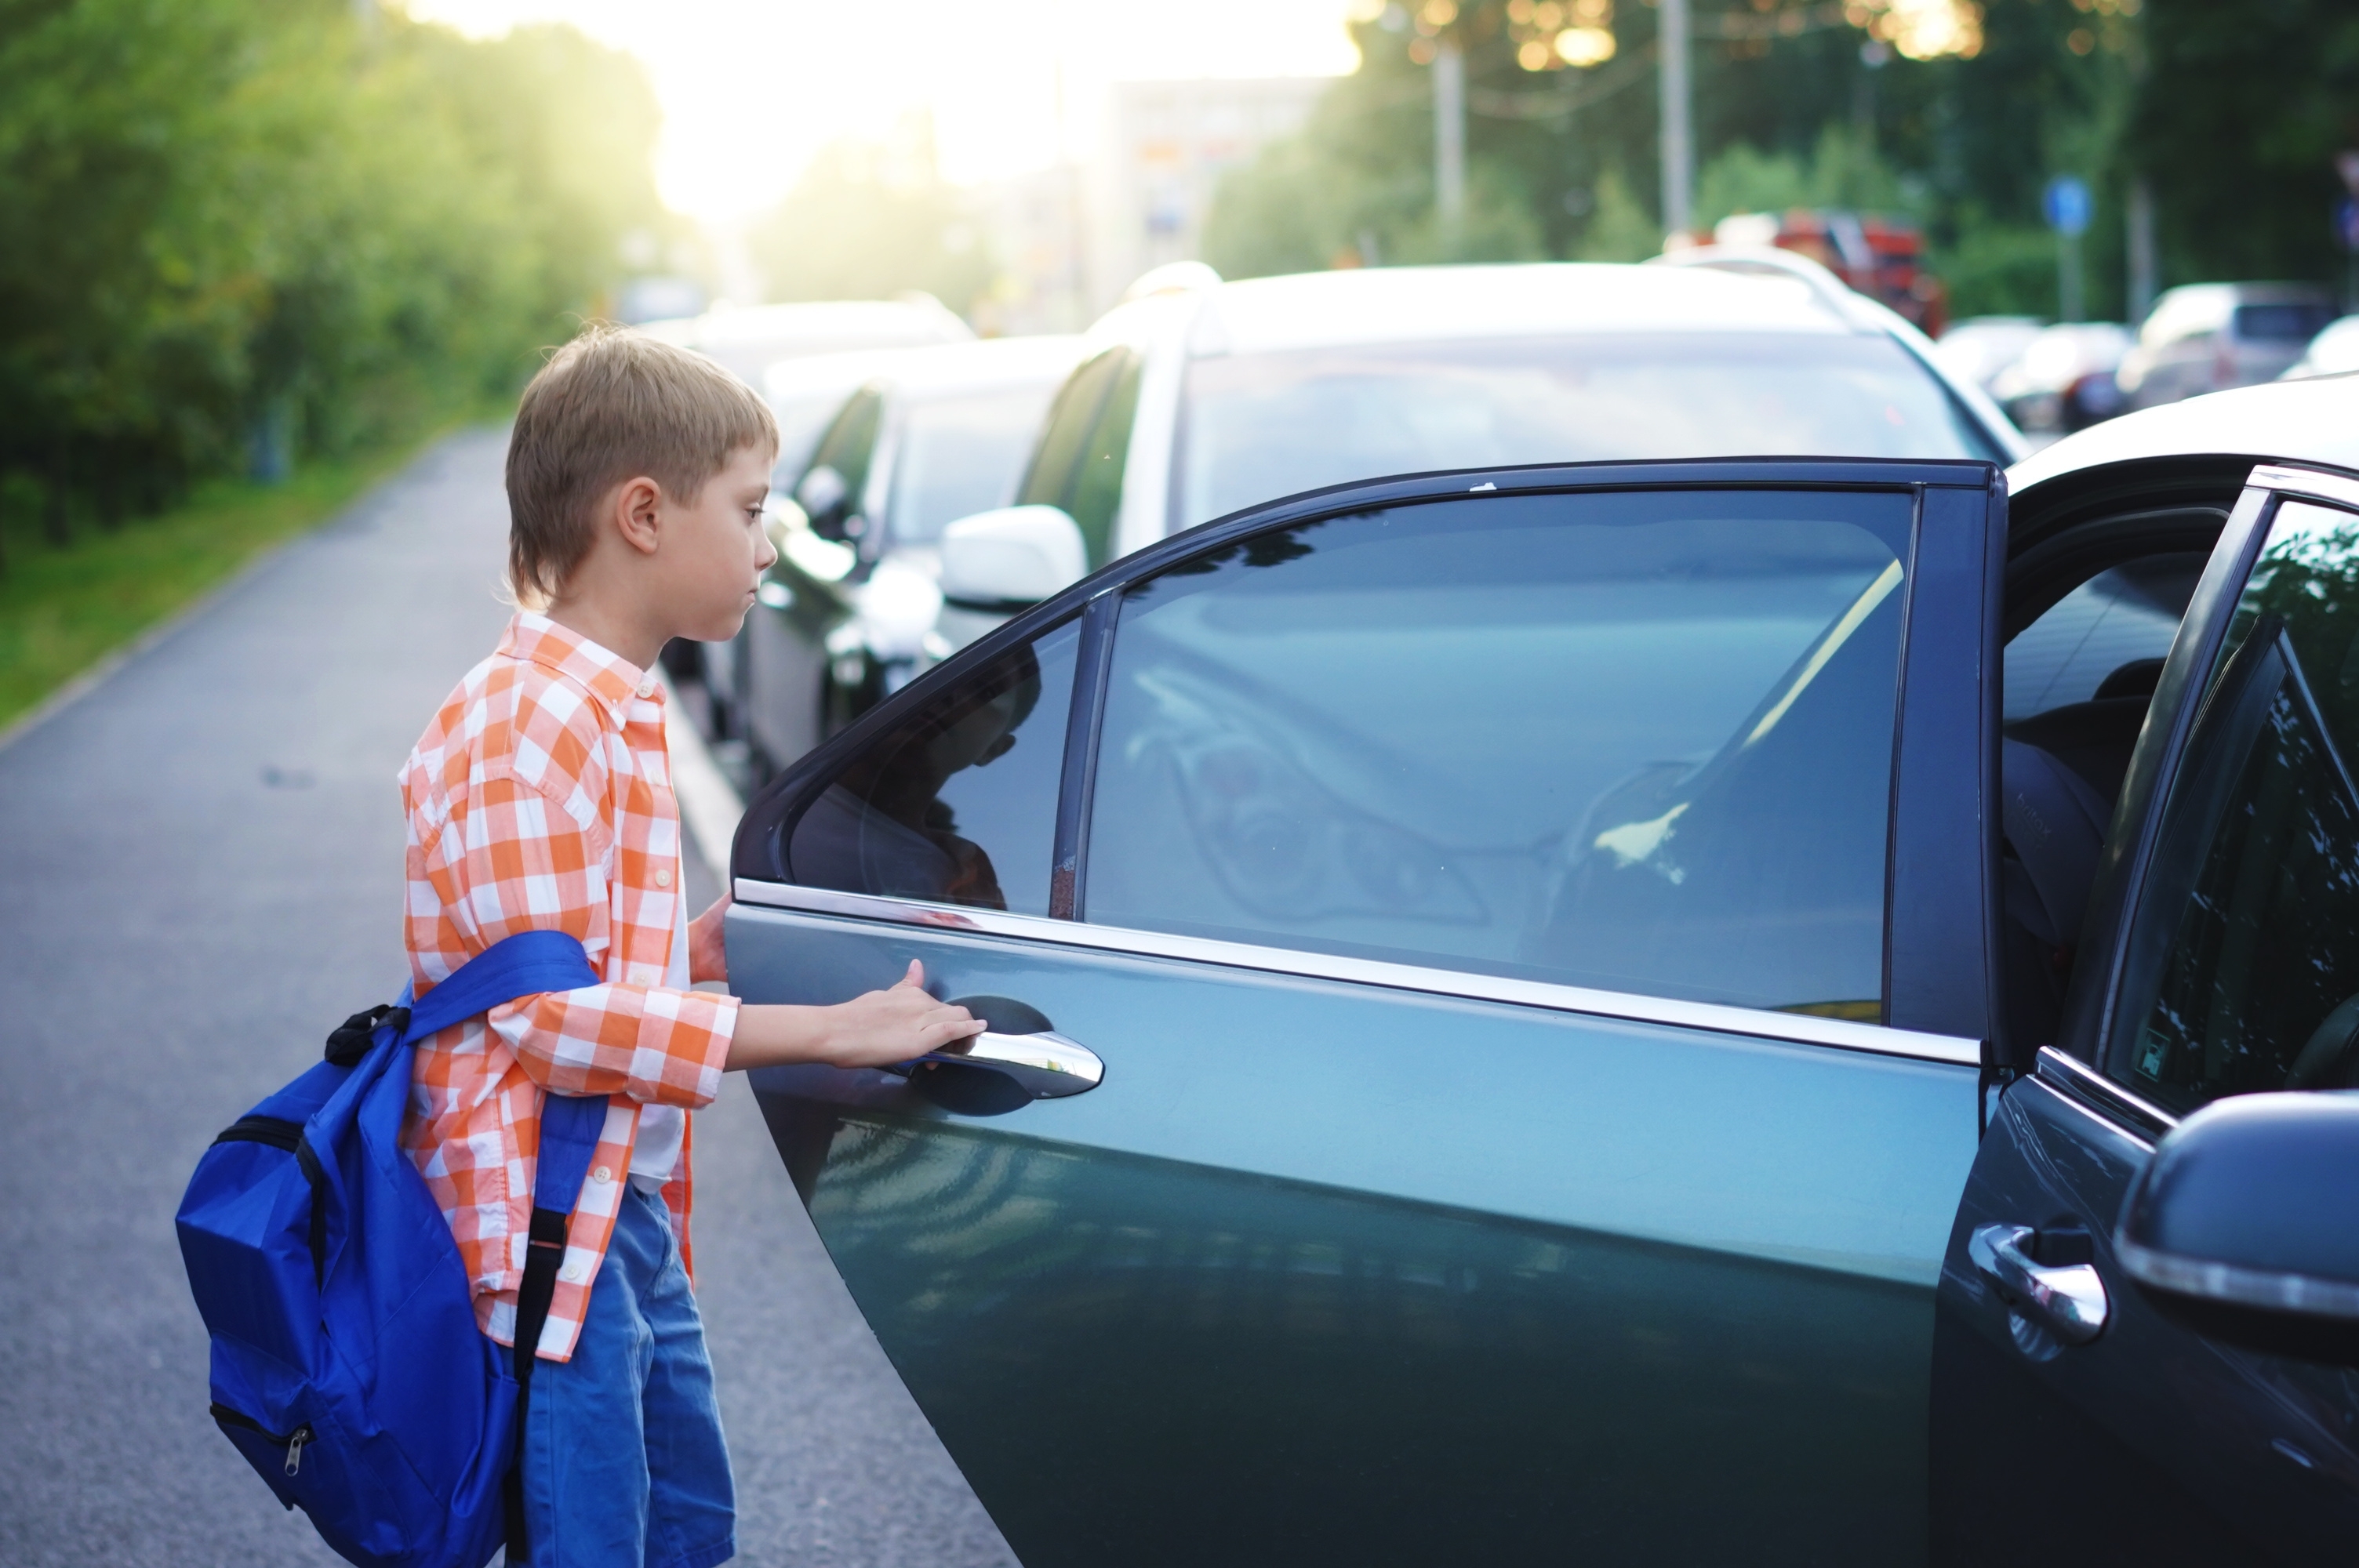 Niño saliendo de un automóvil | Fuente: Shutterstock.com